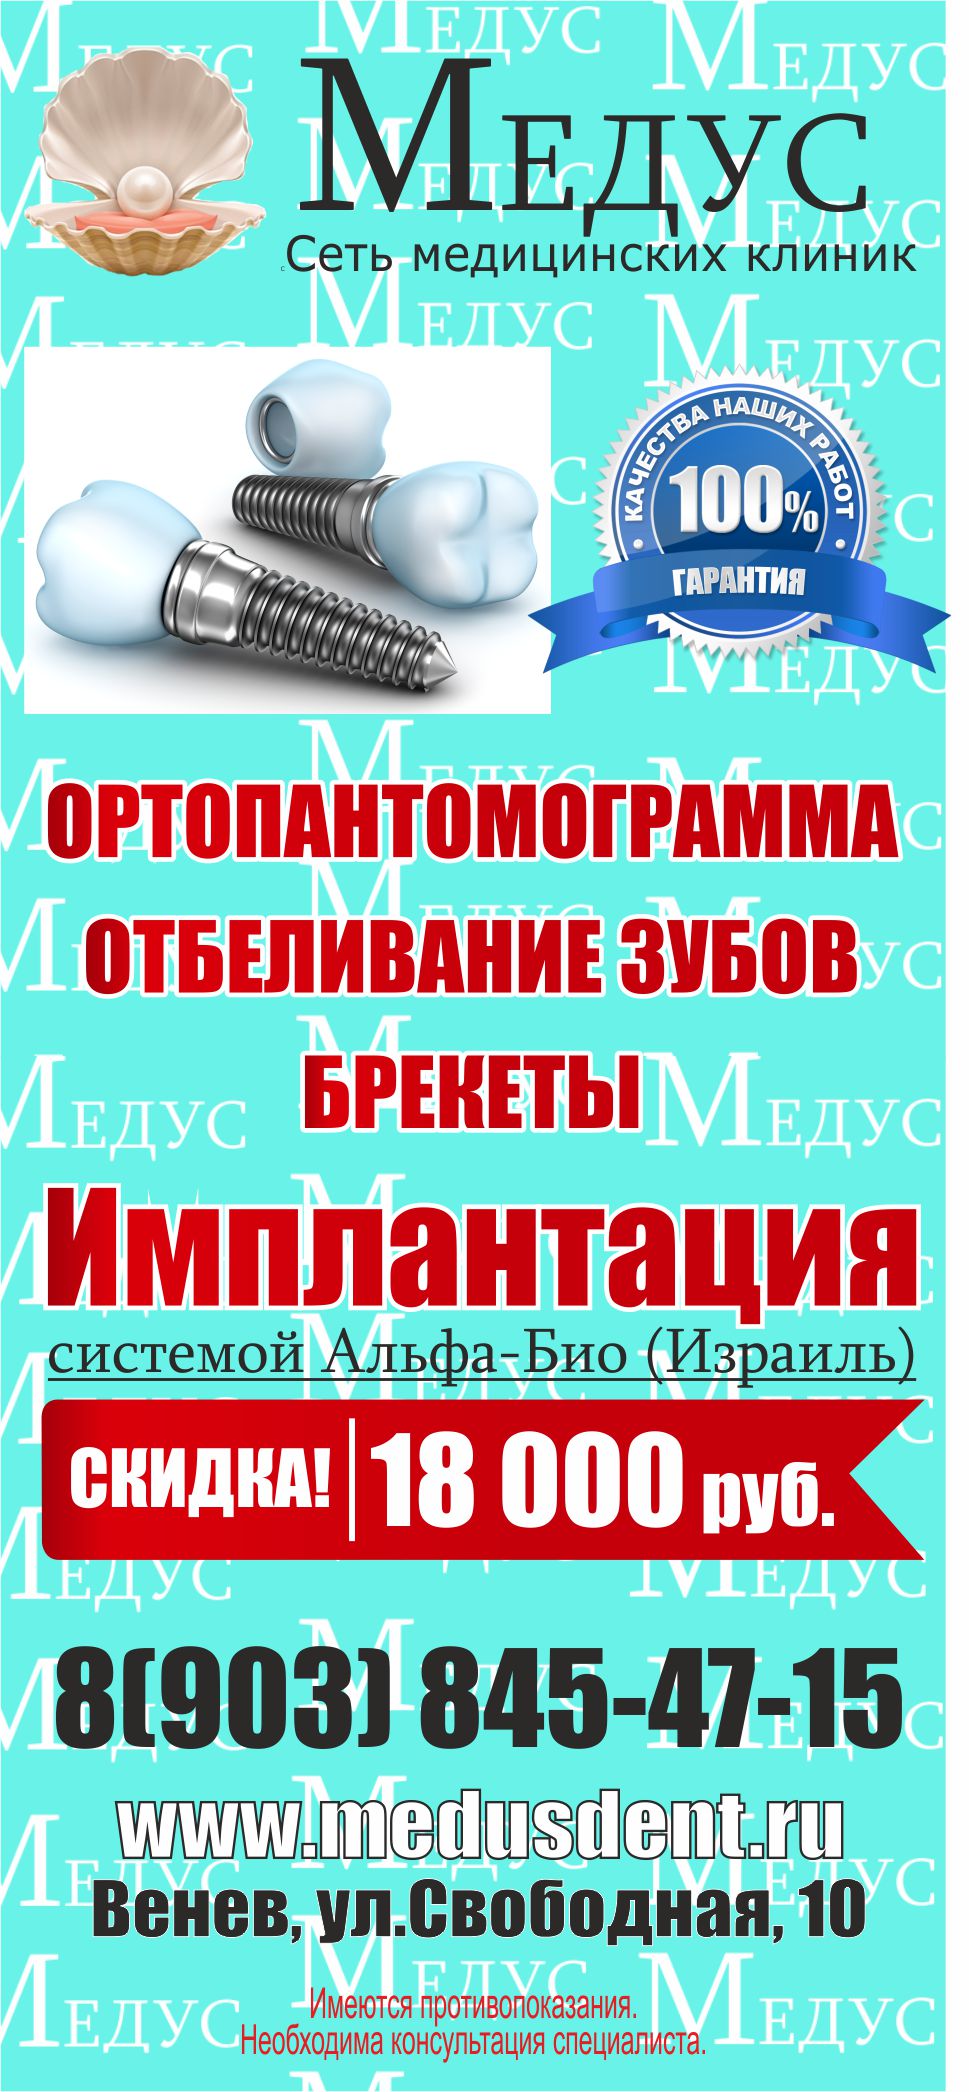 Имплантация ! Акция - 18000 рублей